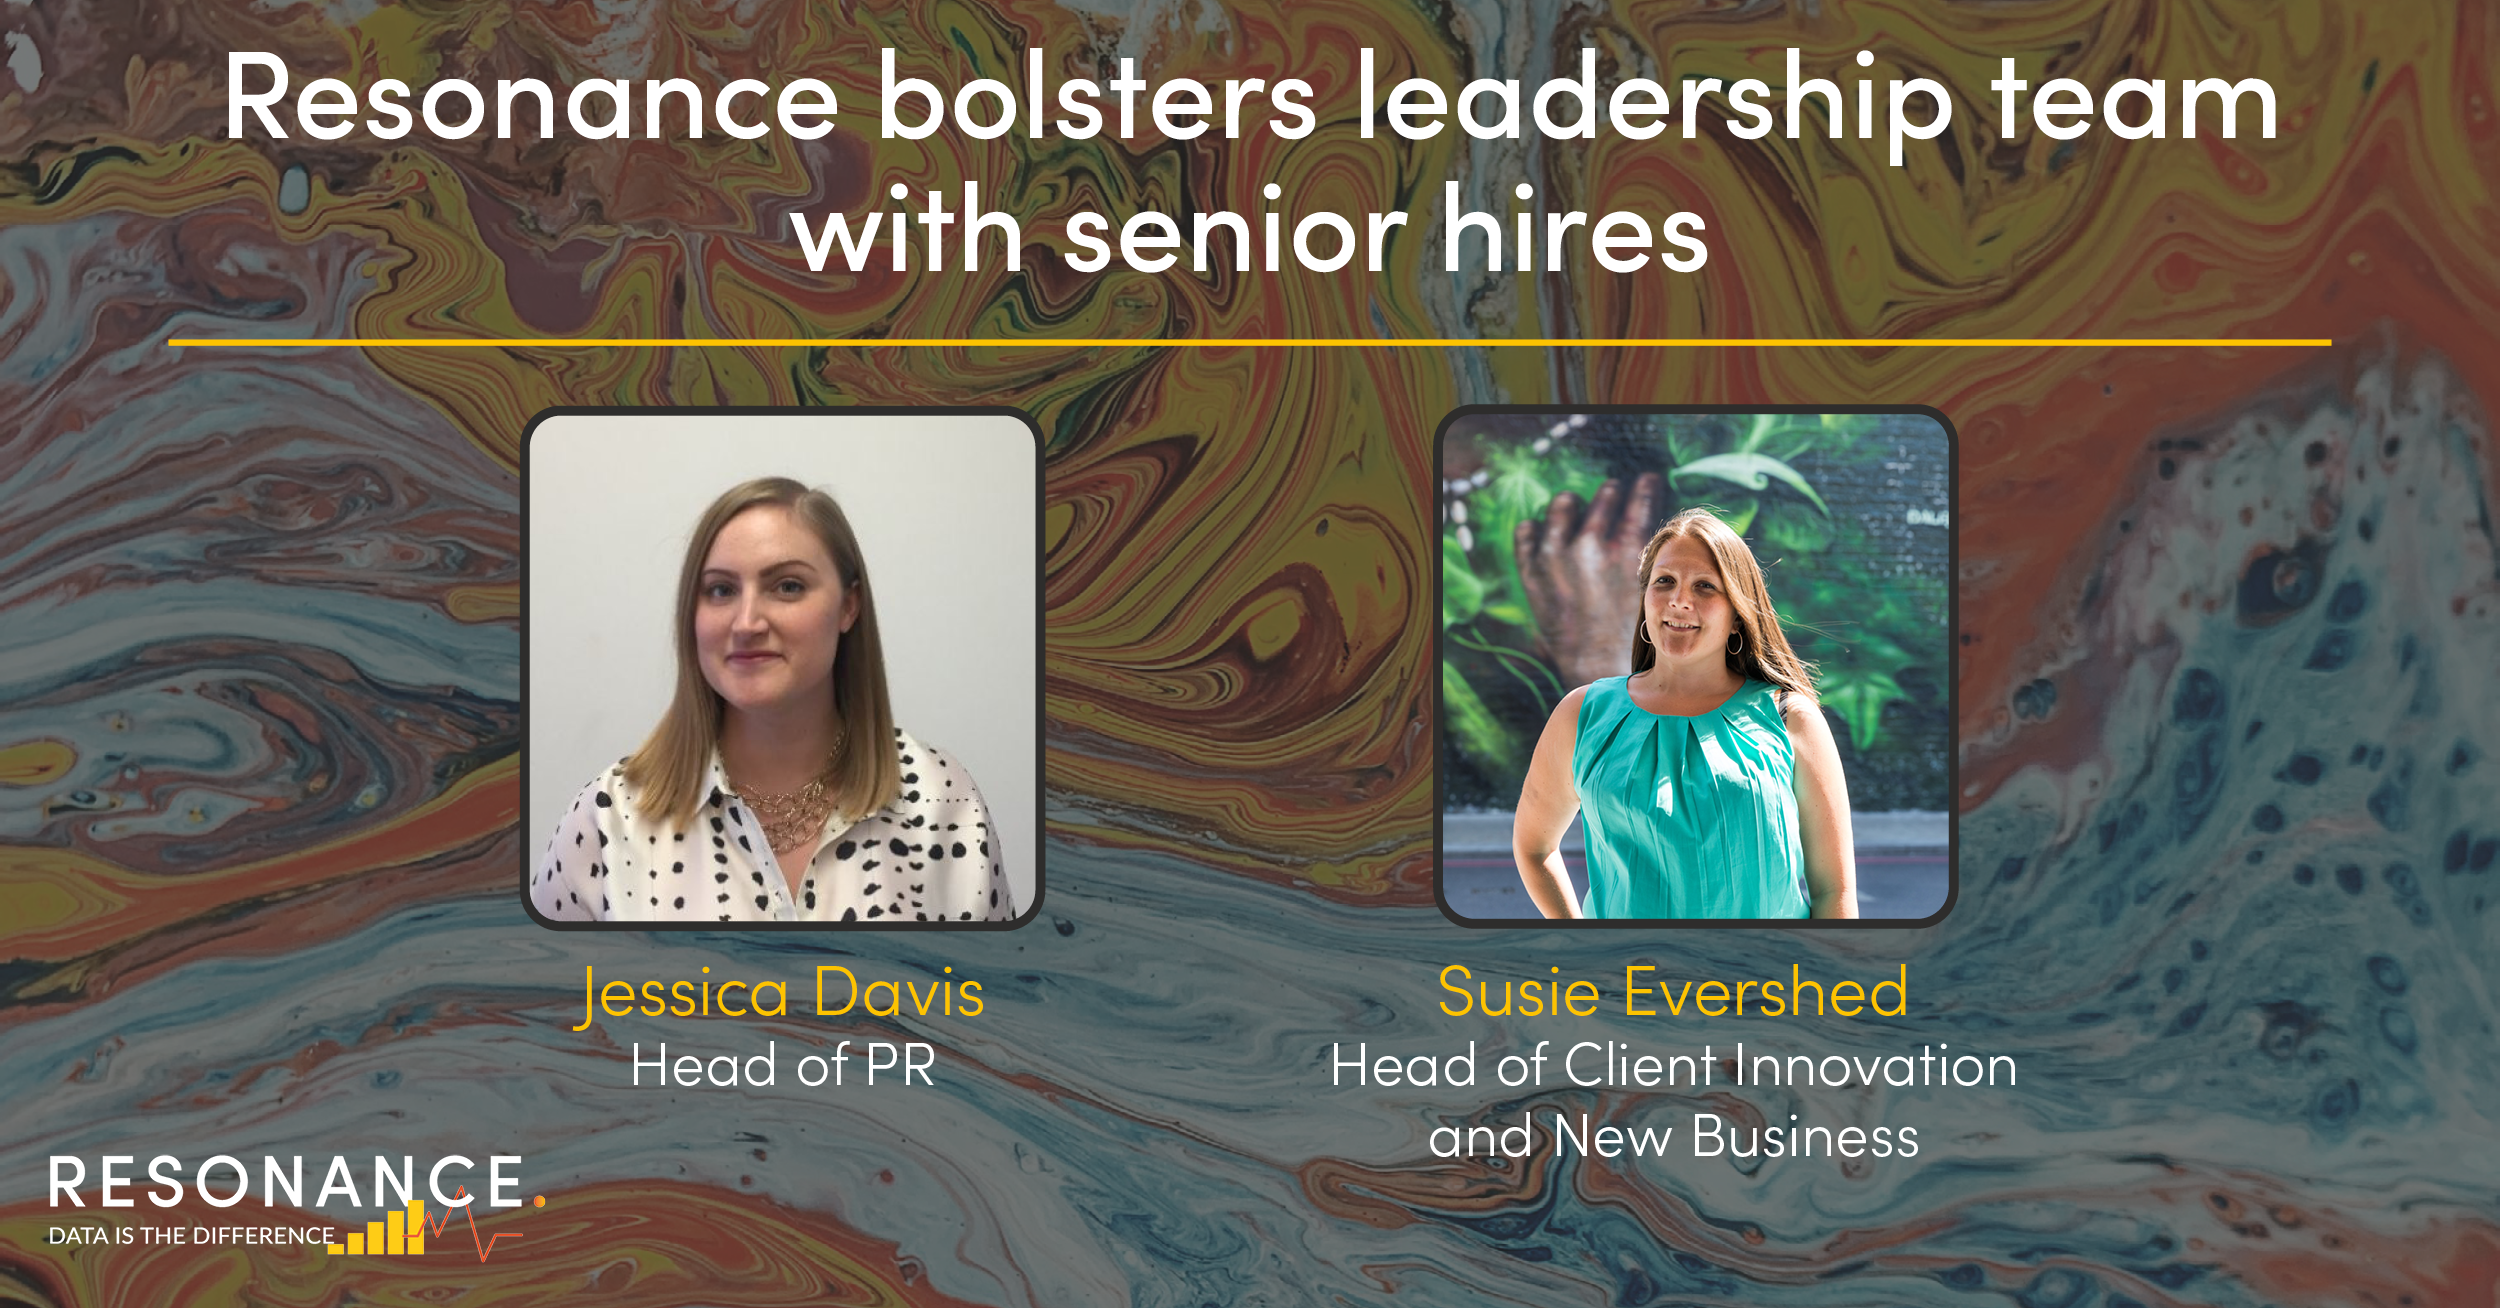 News: Resonance bolsters leadership team with senior hires